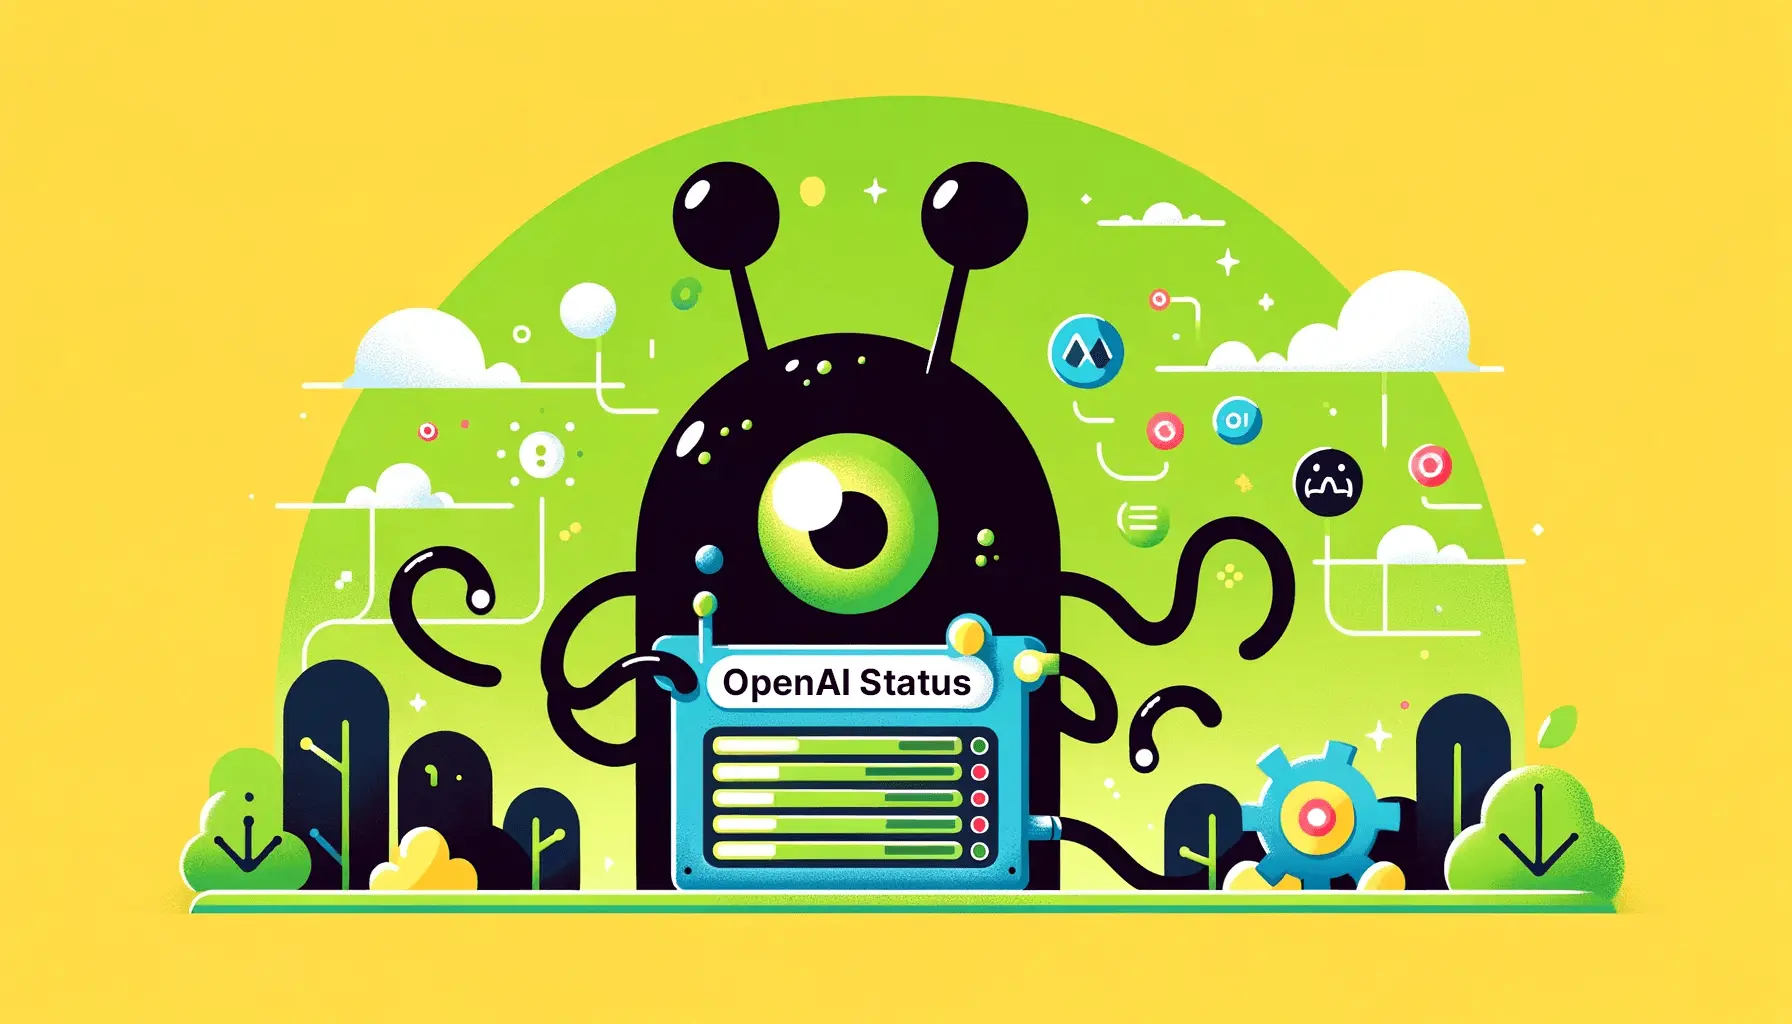 OpenAI API Status Explained (With Images)